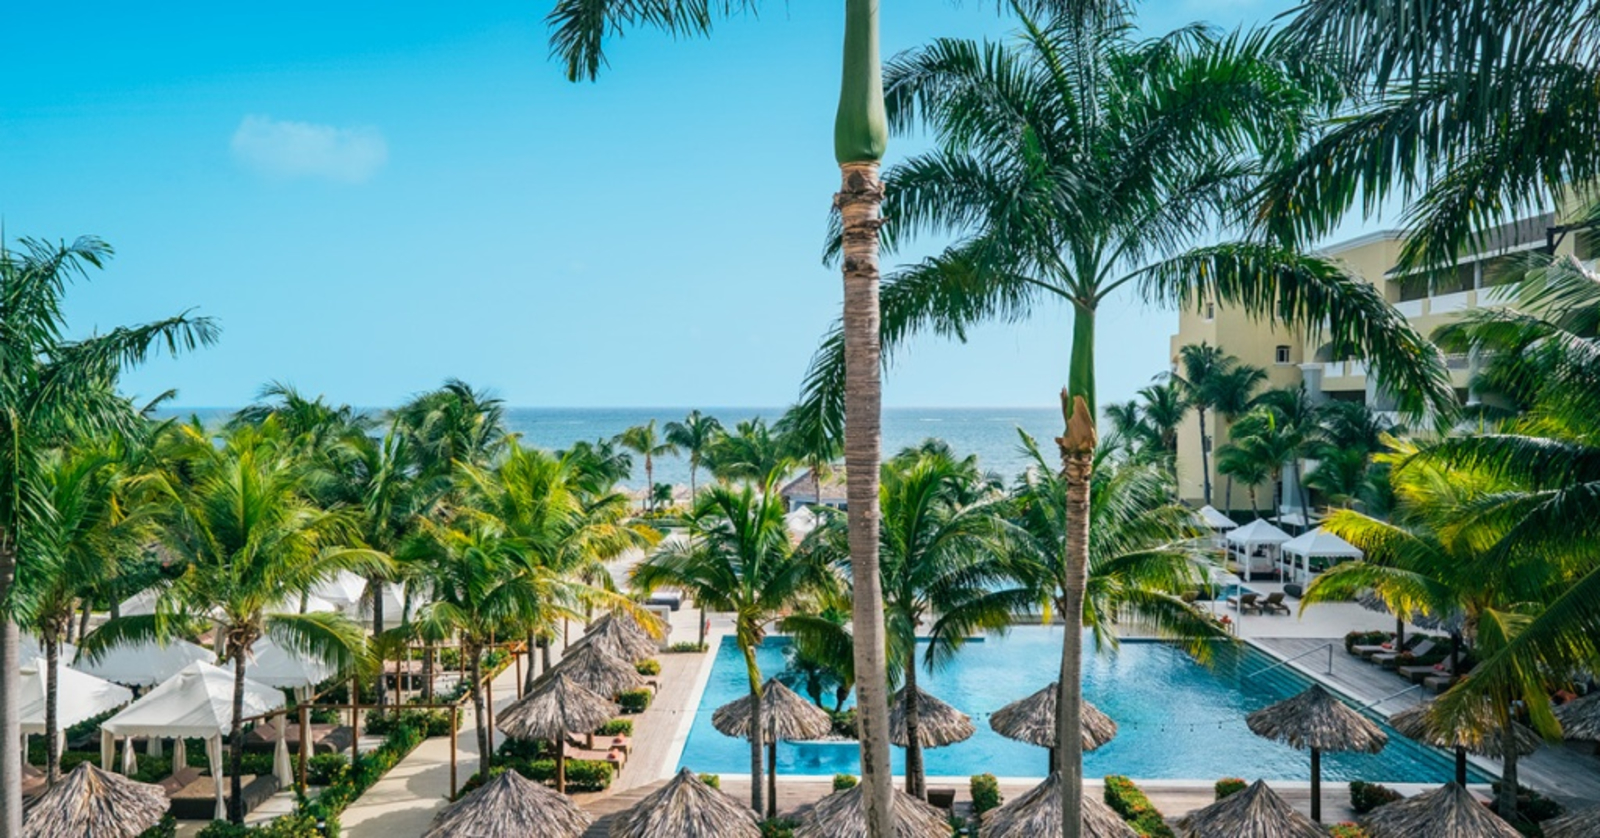 Palm trees surrounding a beachside hotel pool